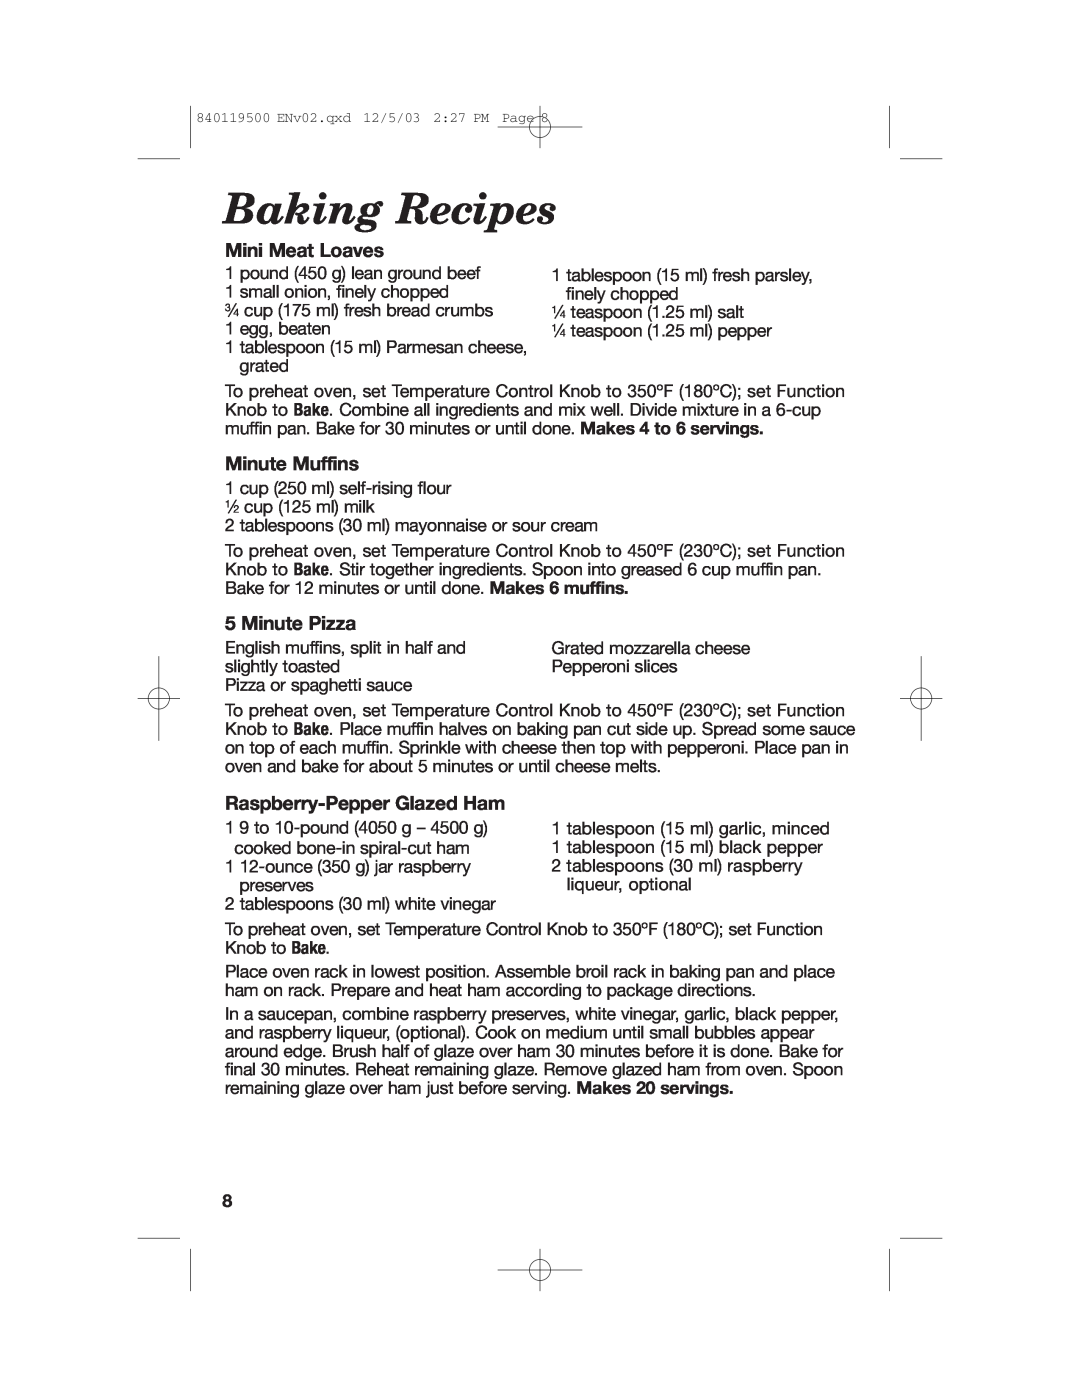 Hamilton Beach 31195 manual Mini Meat Loaves, Minute Muffins, Minute Pizza, Raspberry-PepperGlazed Ham, Baking Recipes 